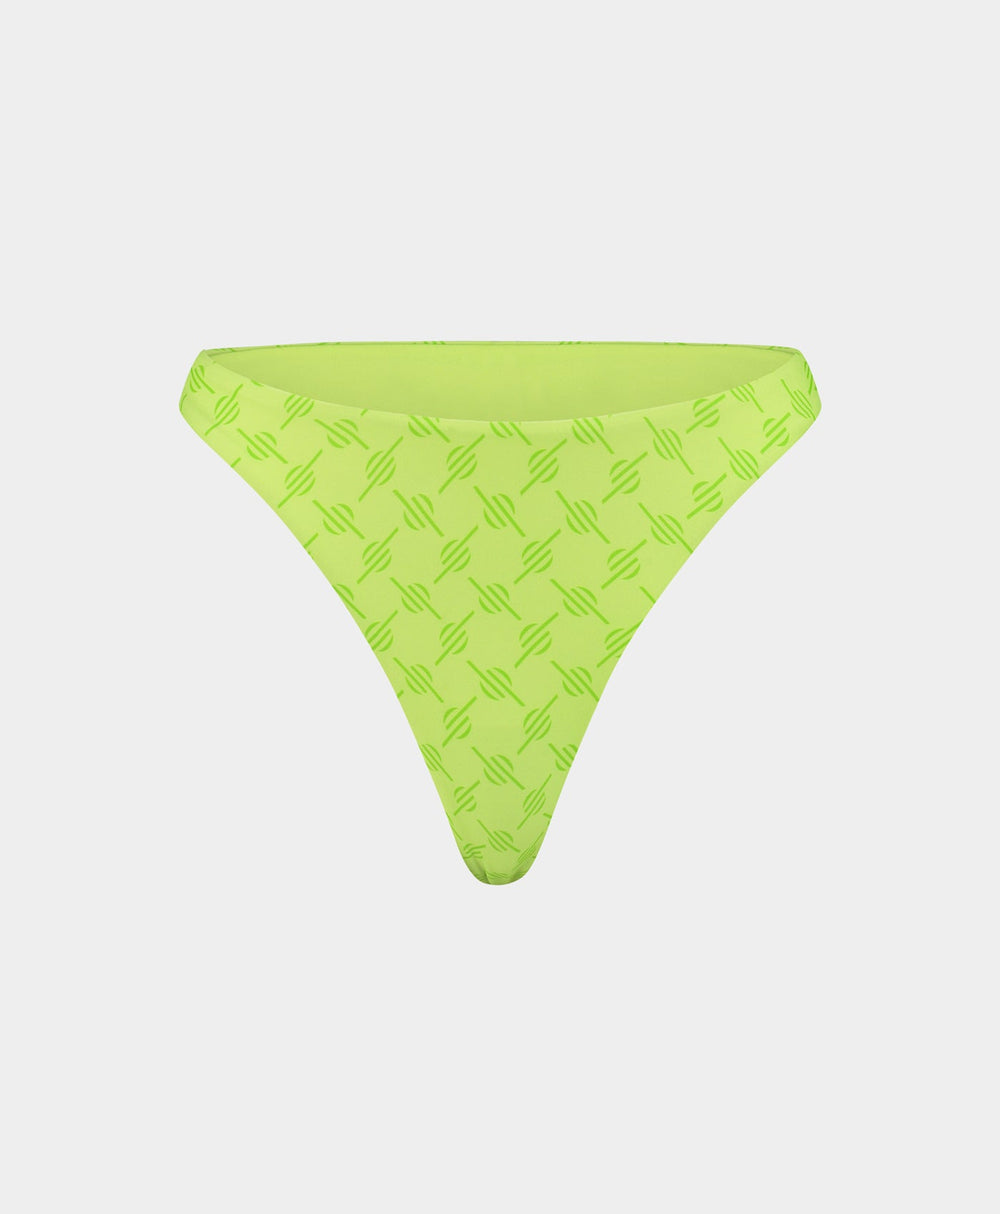 DP - Daiquiri Green Zazi Monogram Bikini Bottom - Packshot - Front